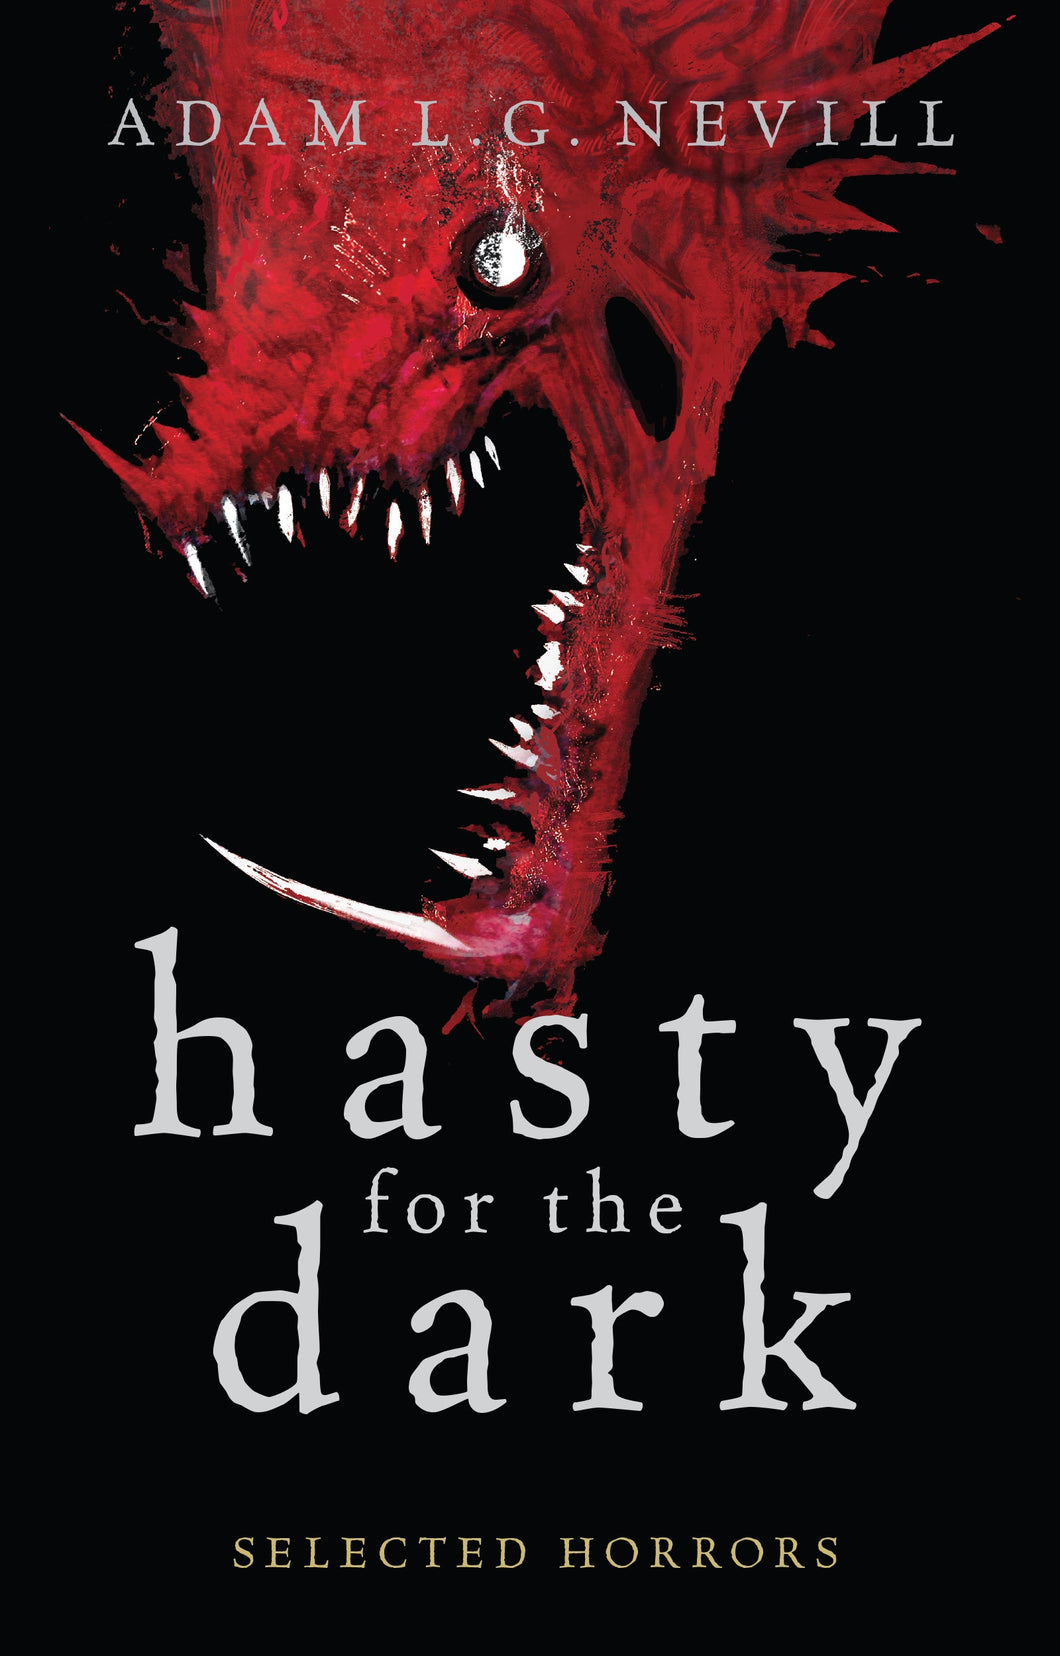 Hasty for the Dark: Selected Horrors - standard hardback book